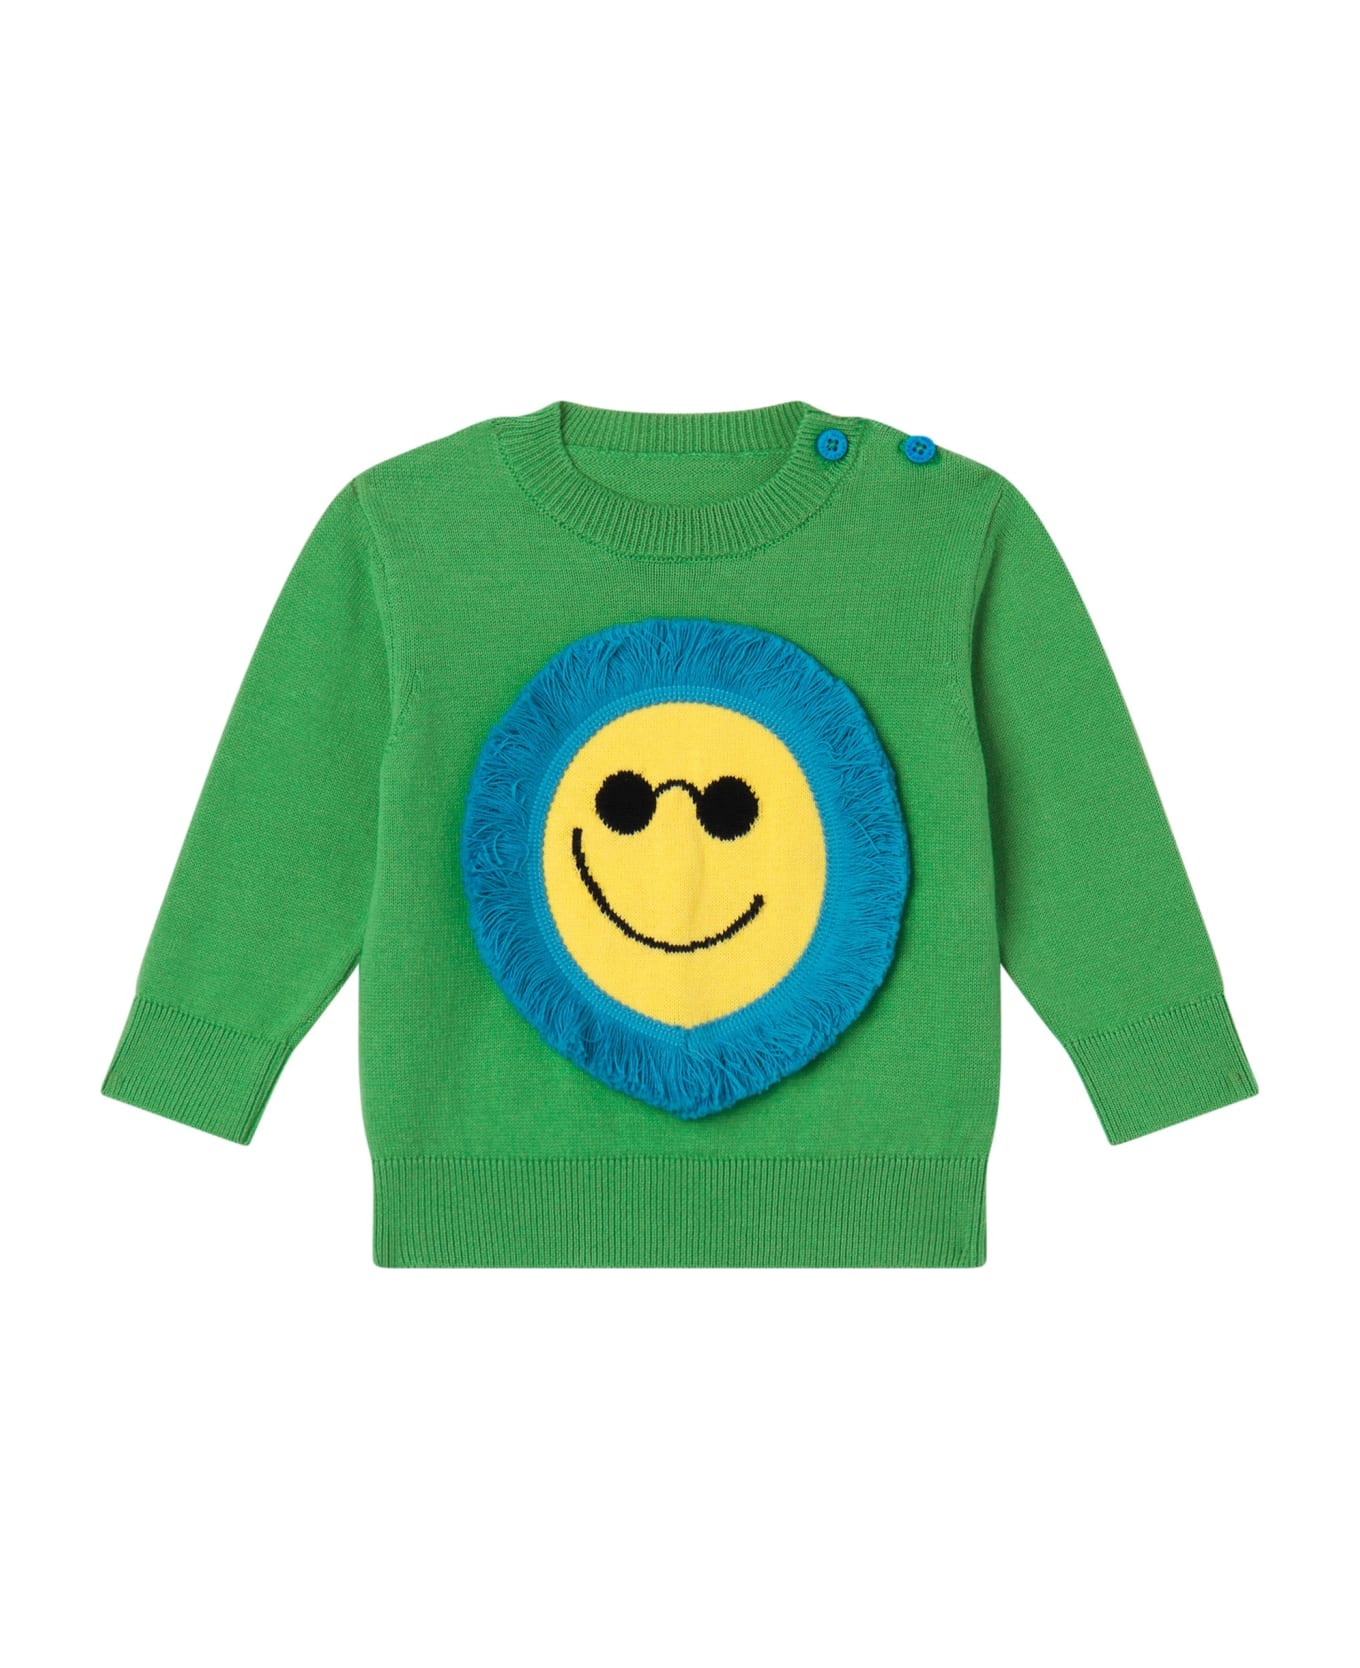 Stella McCartney Kids Sweater With Application - Green